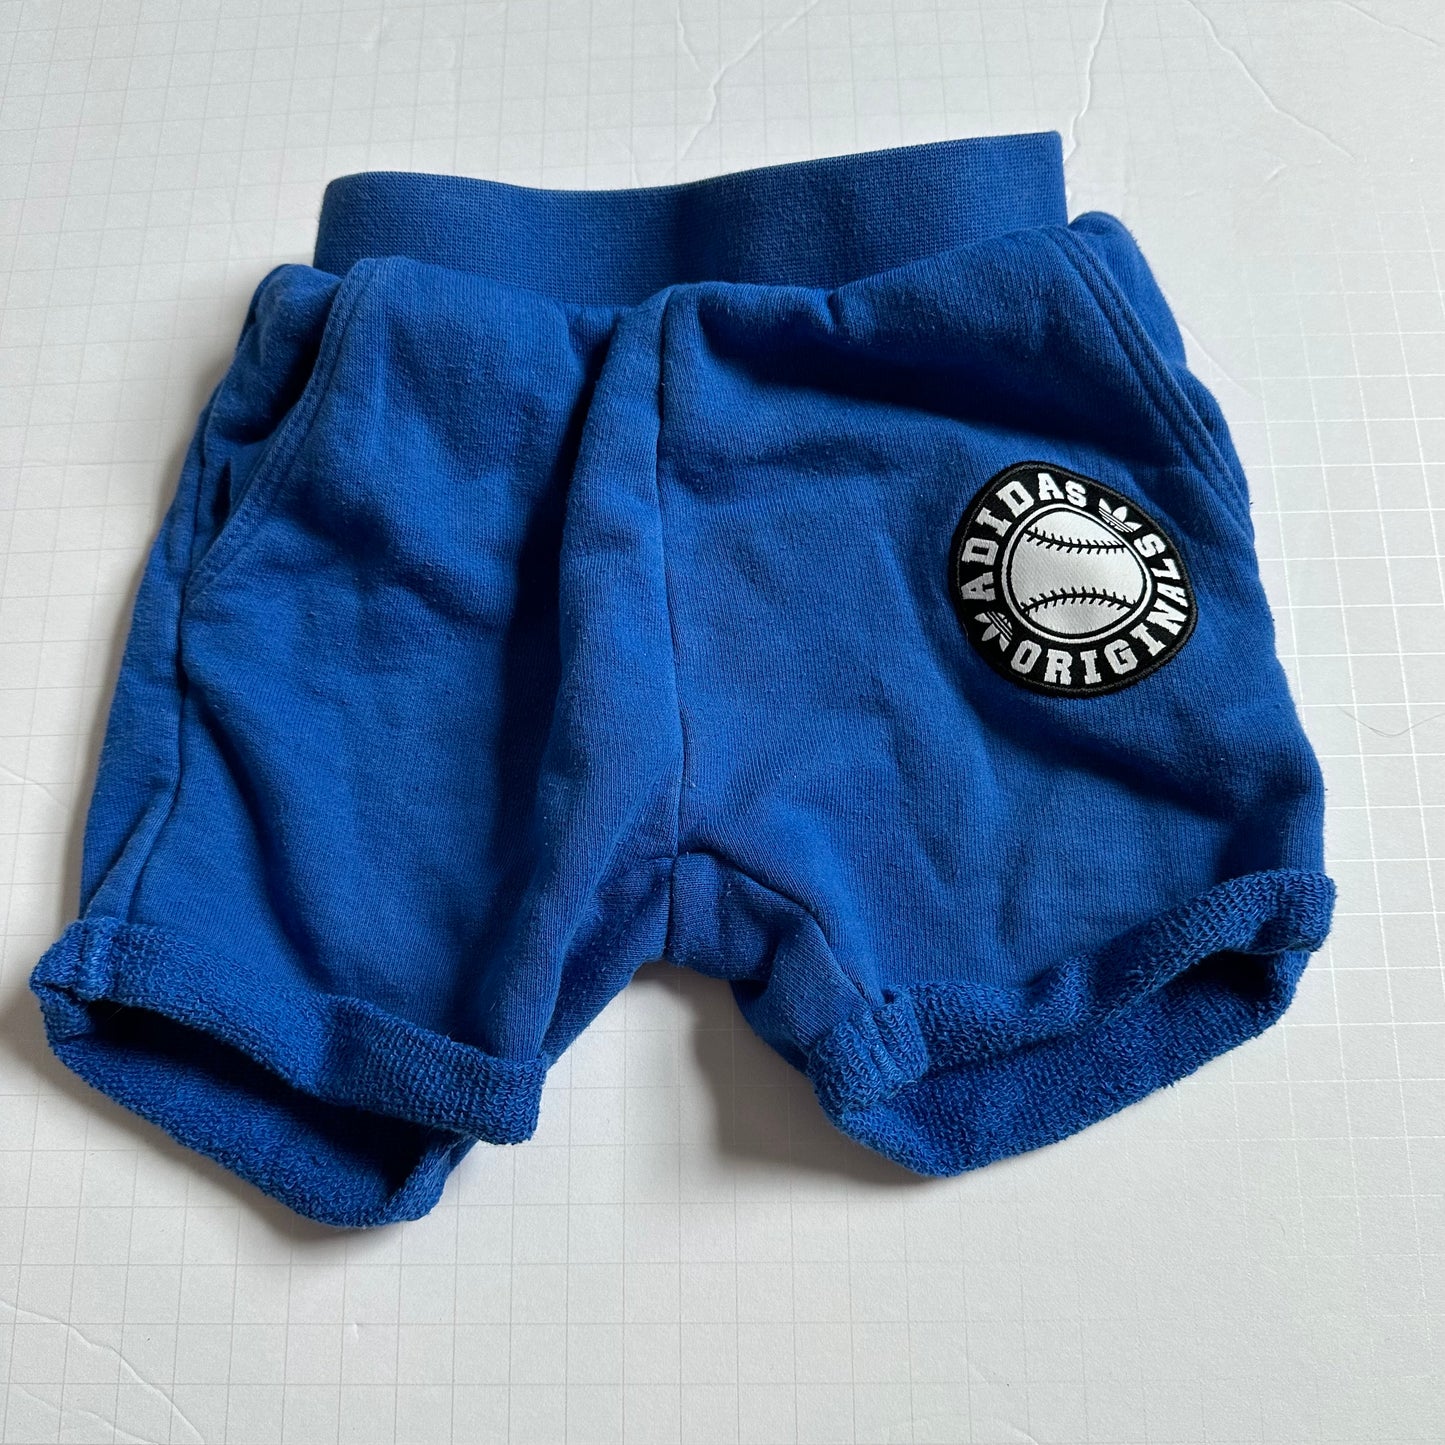 12-18M Blue Adidas Shorts